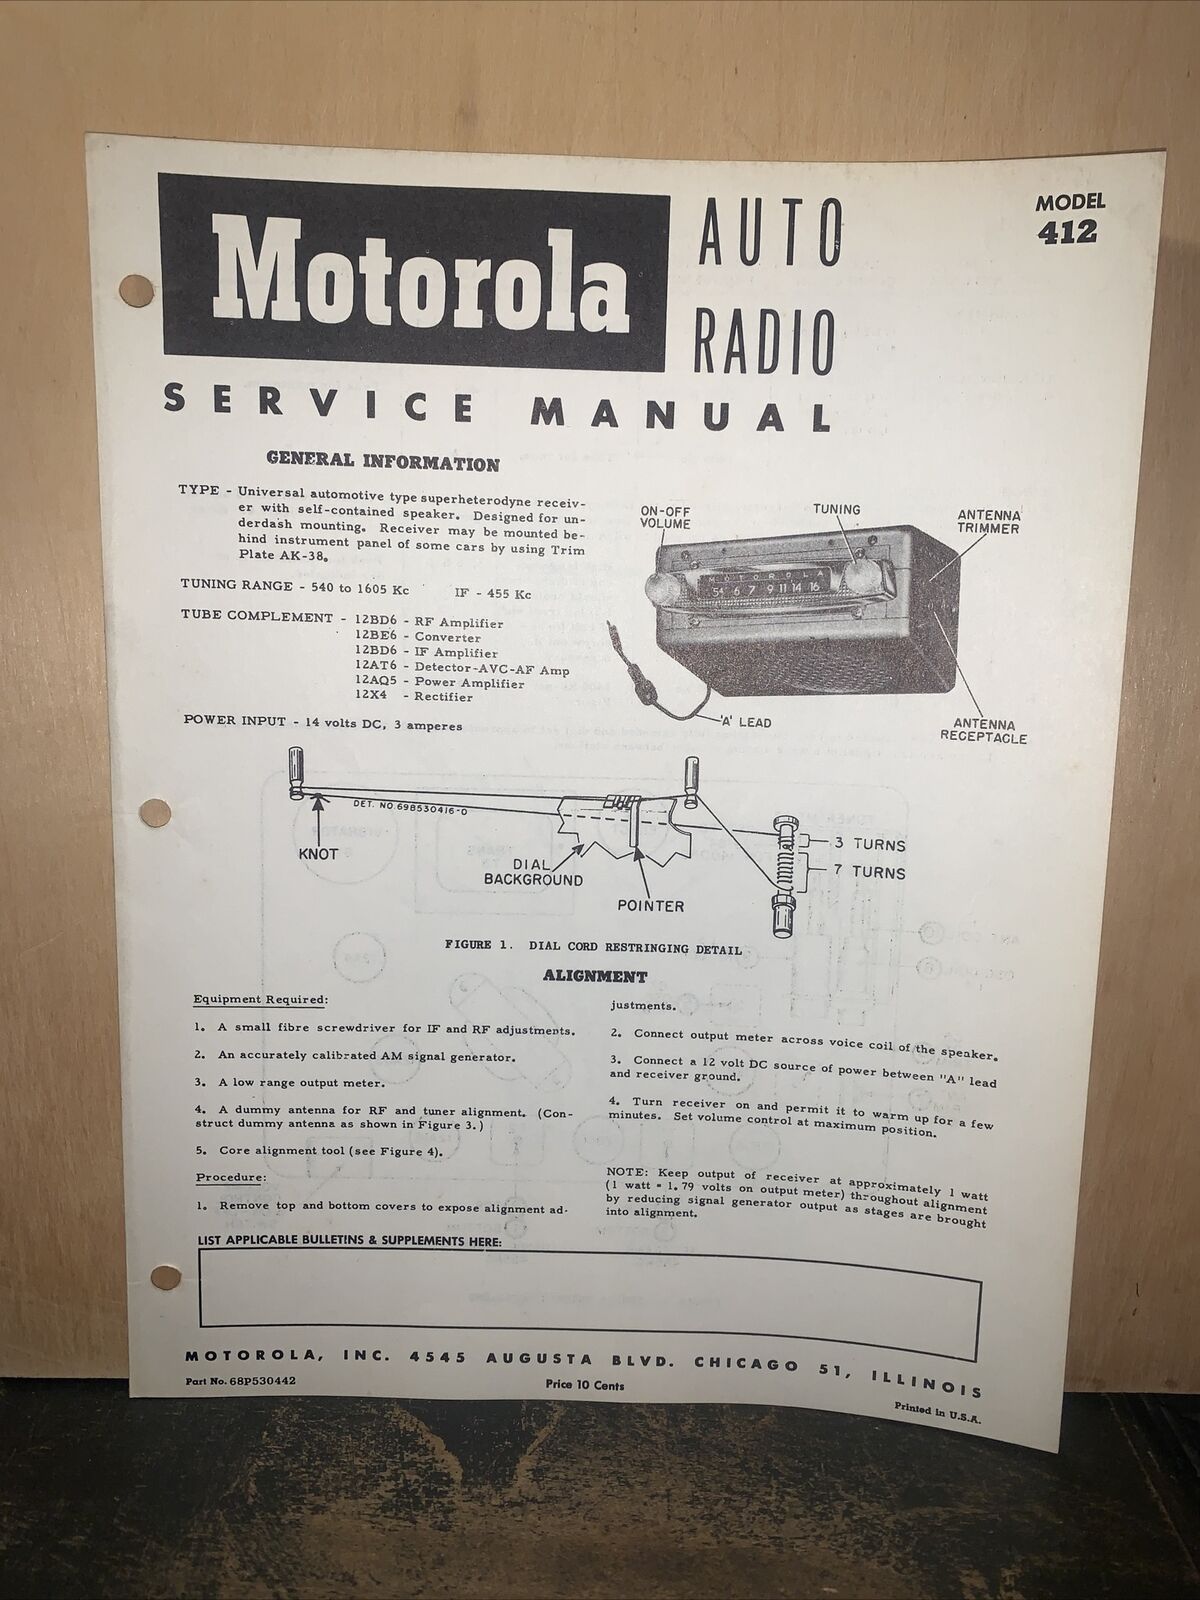 Motorola Auto Radio Model 412 Service Manual, Schematics.